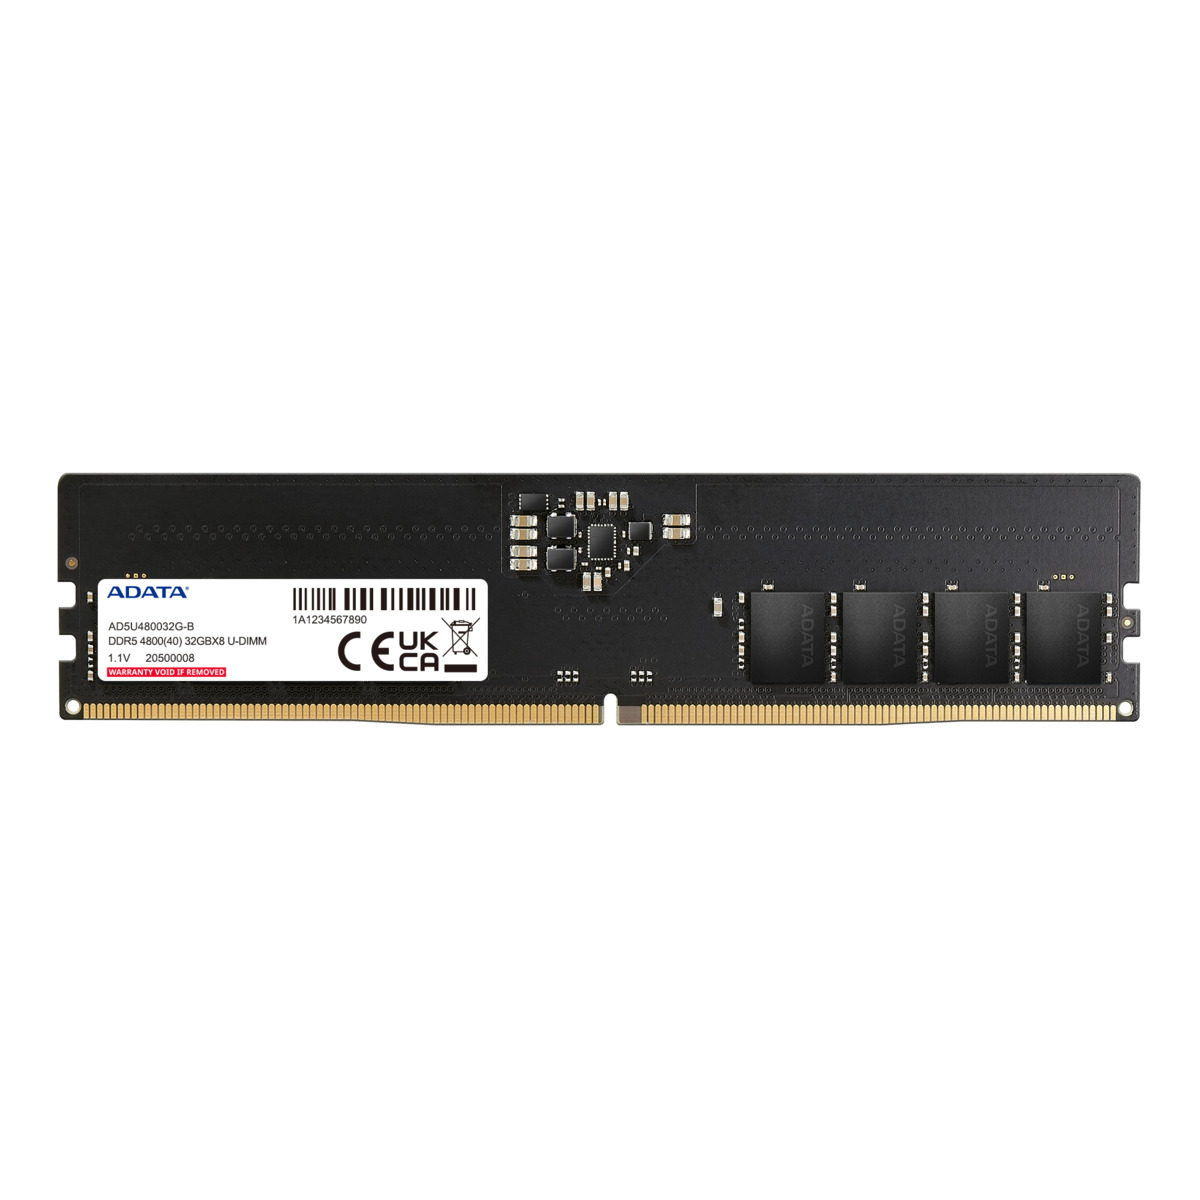 MEMORIA RAM DDR5 ADATA 4800HZ 32GB UDIMM CL40 1.1V (AD5U480032G-S)